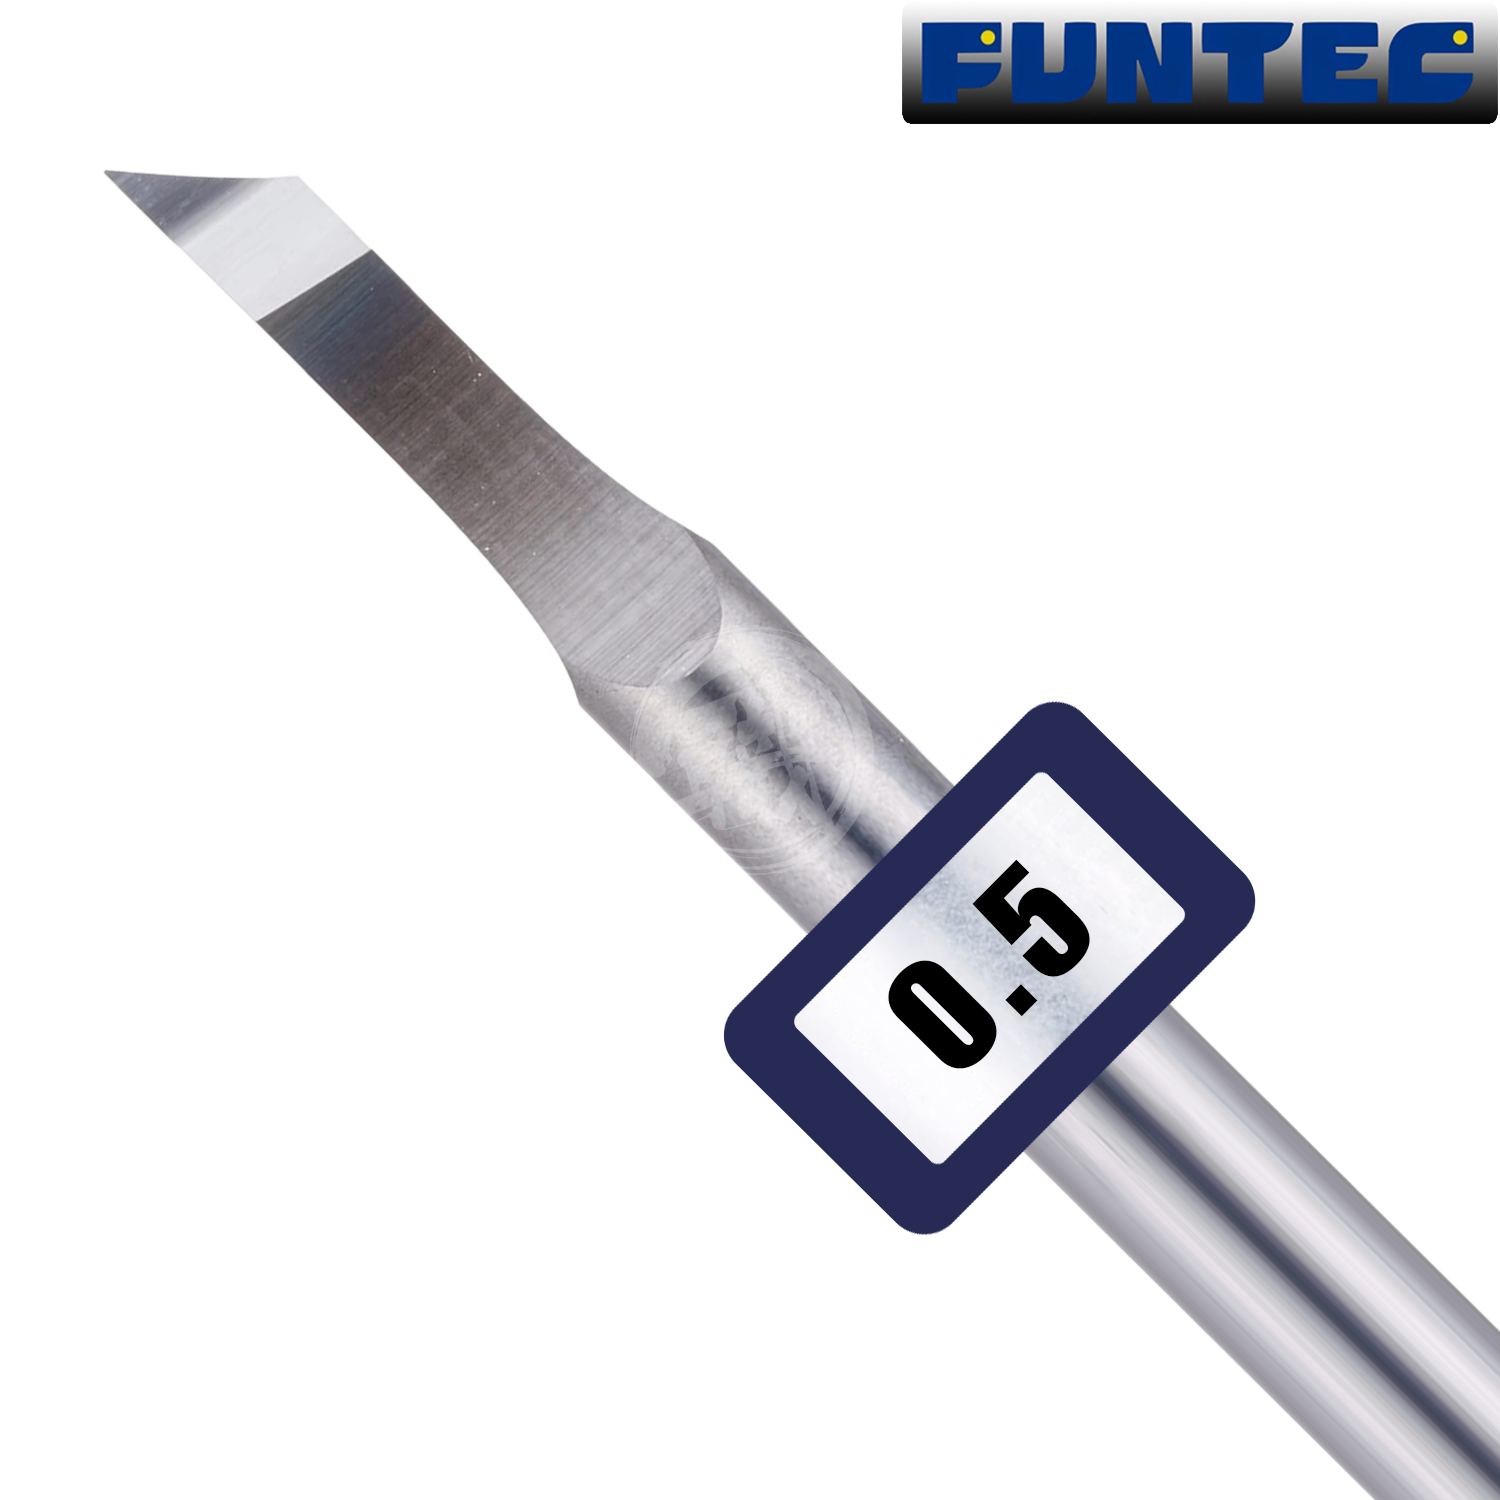 Funtec - Tungsten Carbide Chisel Bits [0.5mm] - ShokuninGunpla